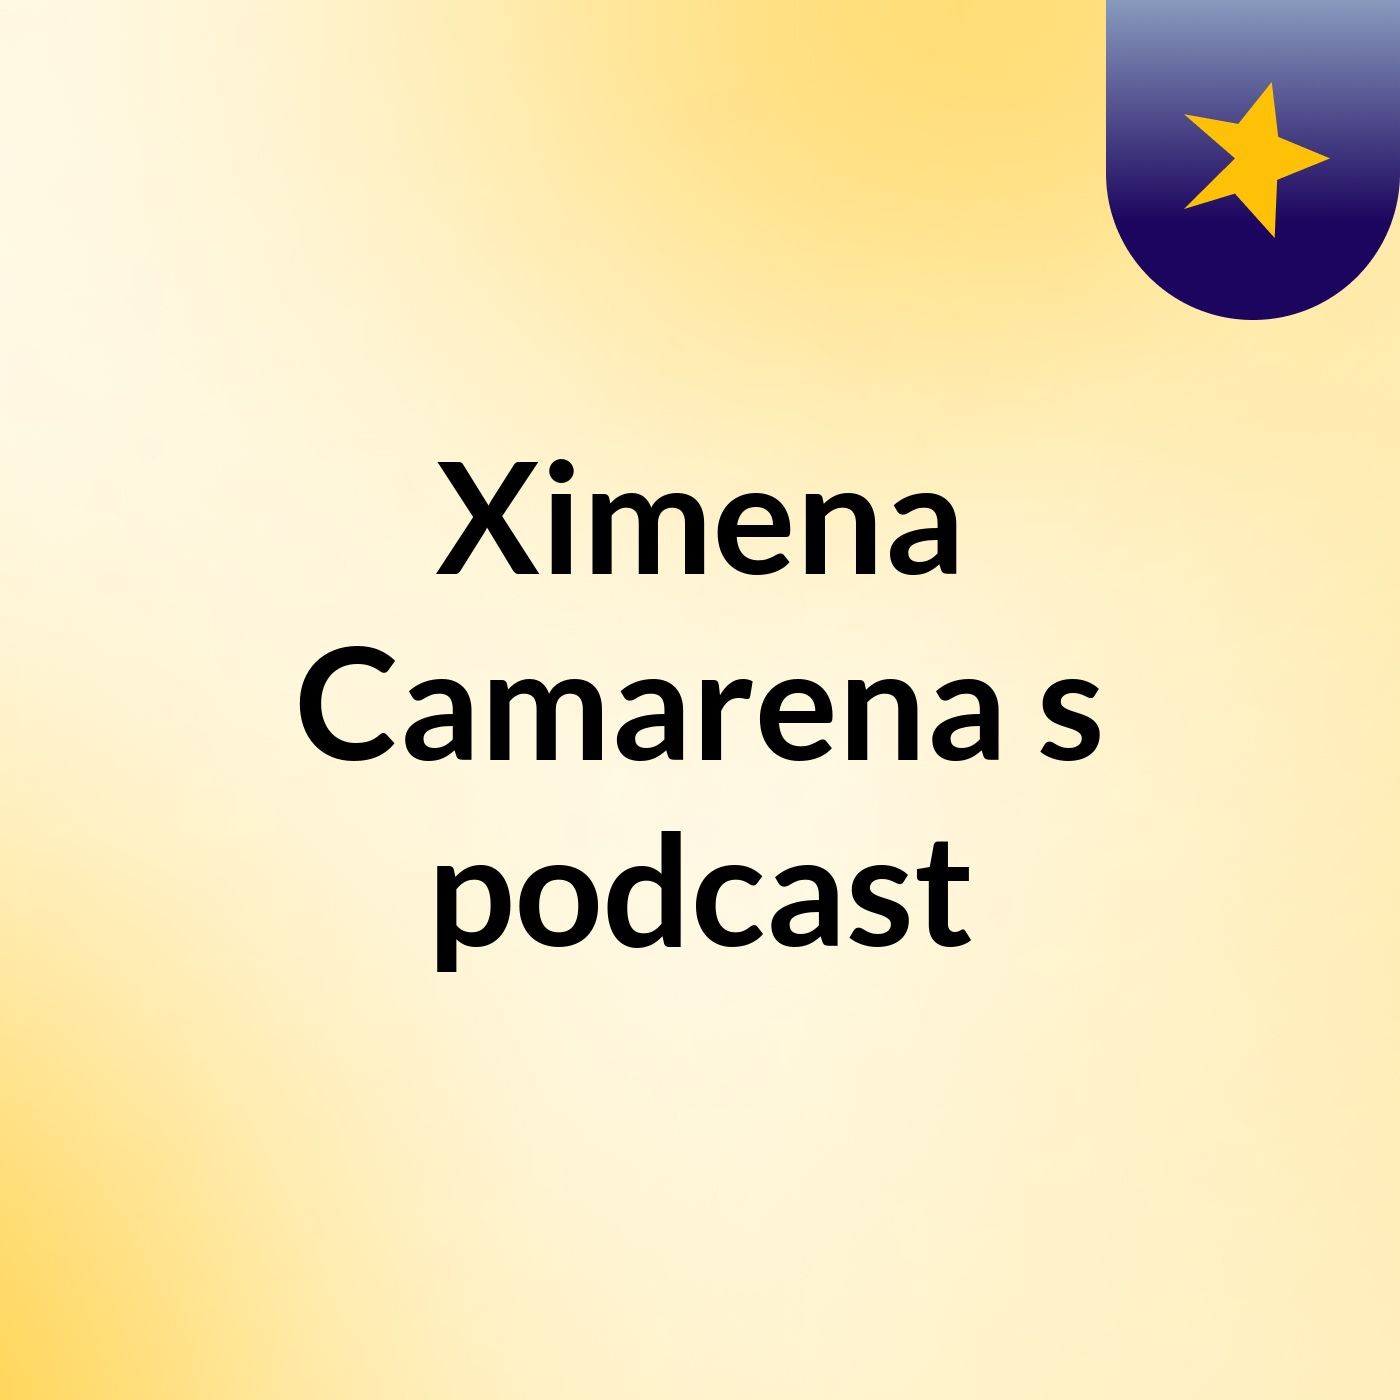 Ximena Camarena's podcast